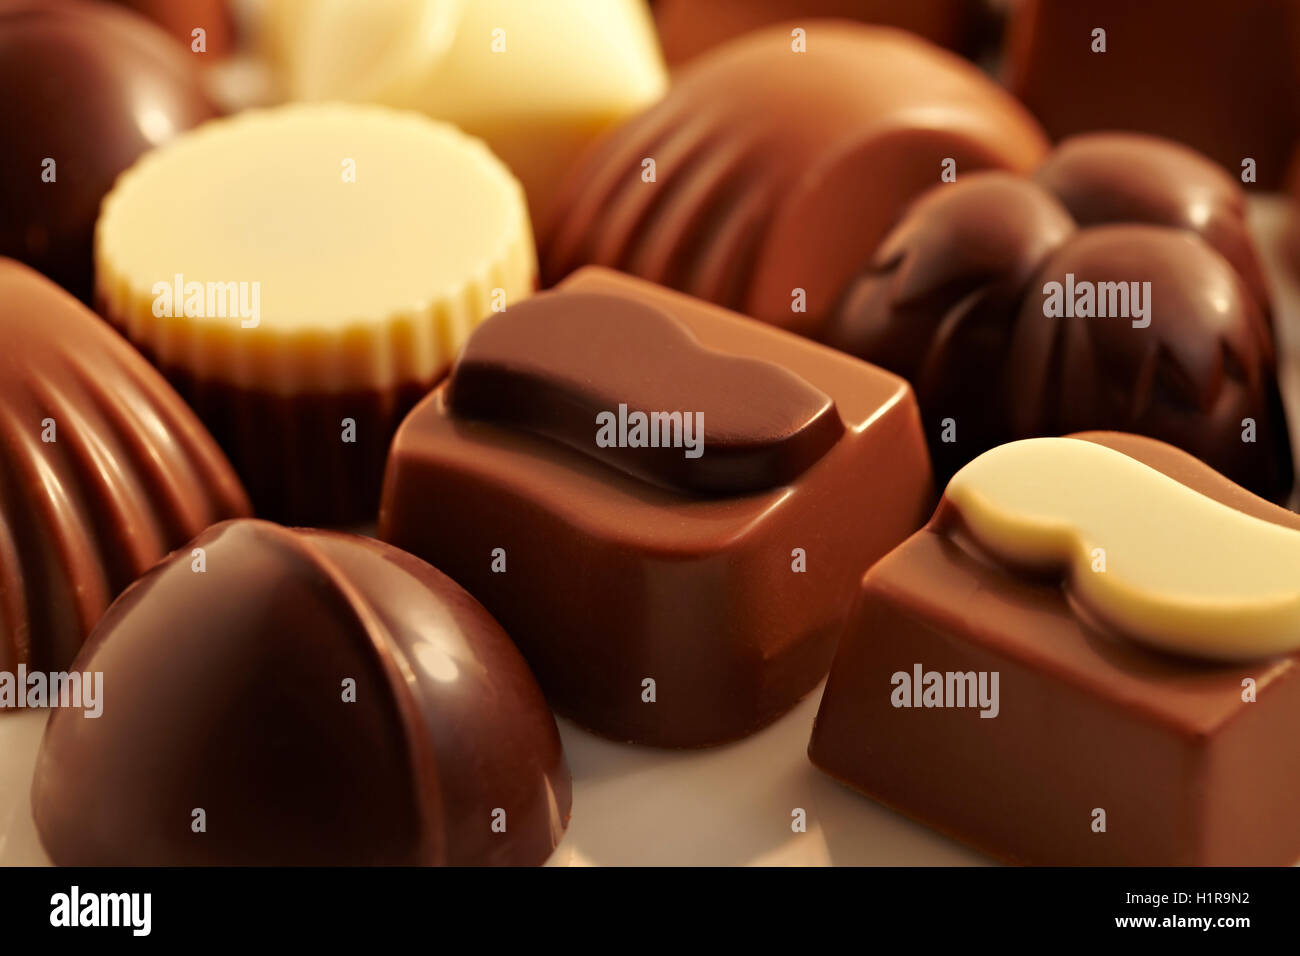 Chocolate sweets. Stock Photo